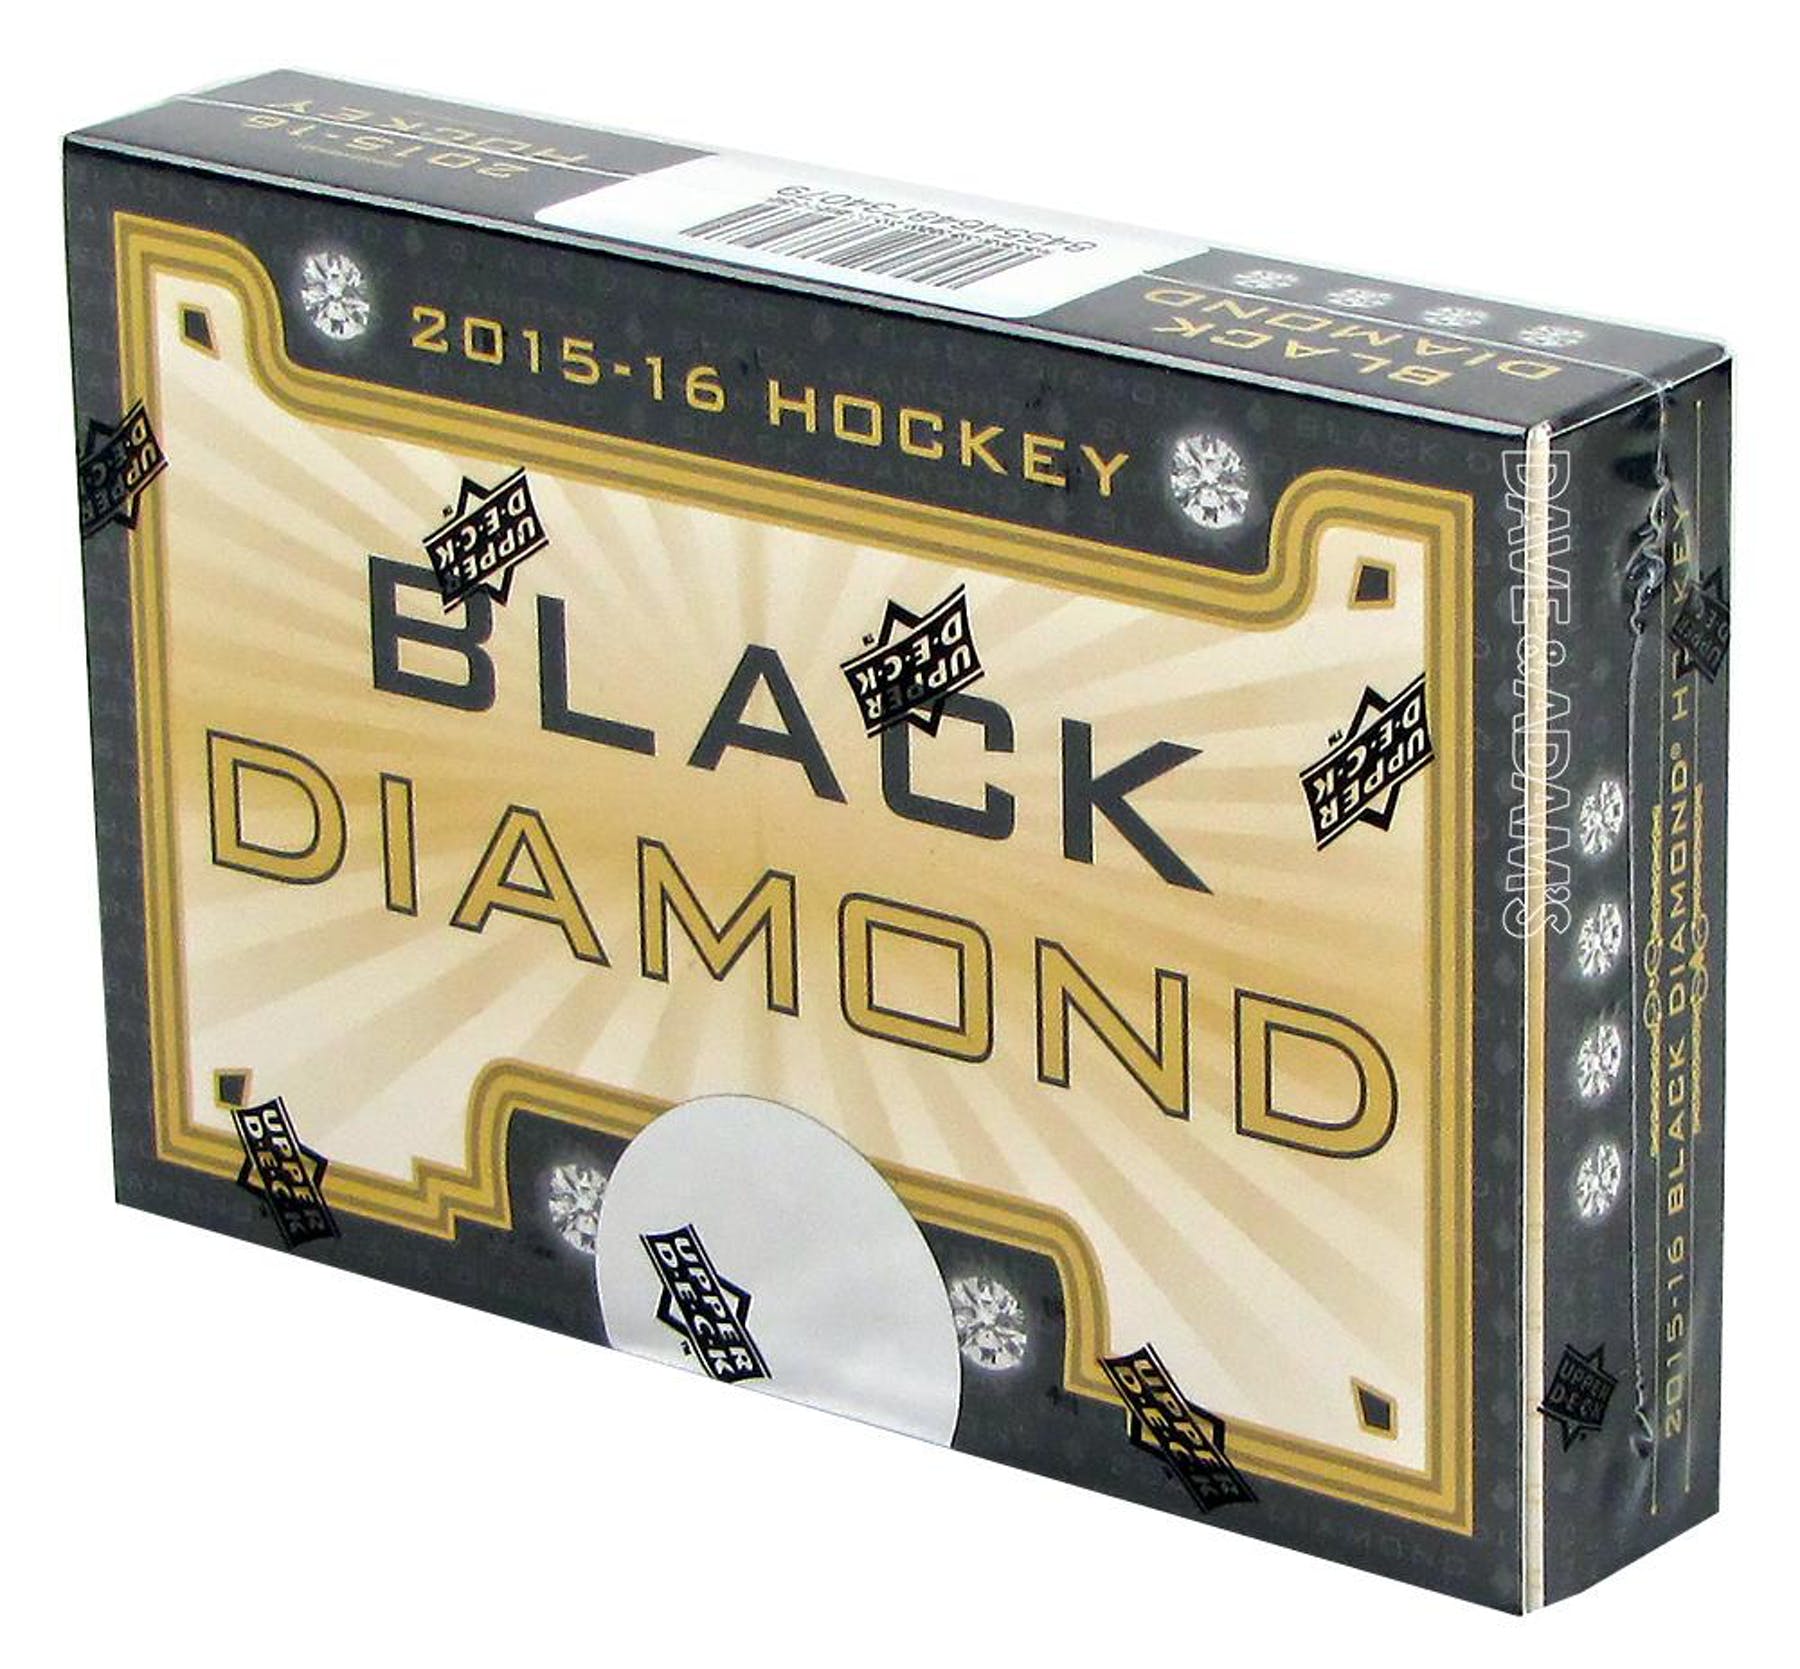 2015-16 Upper Deck Black Diamond NHL Hockey Hobby Box - BigBoi Cards